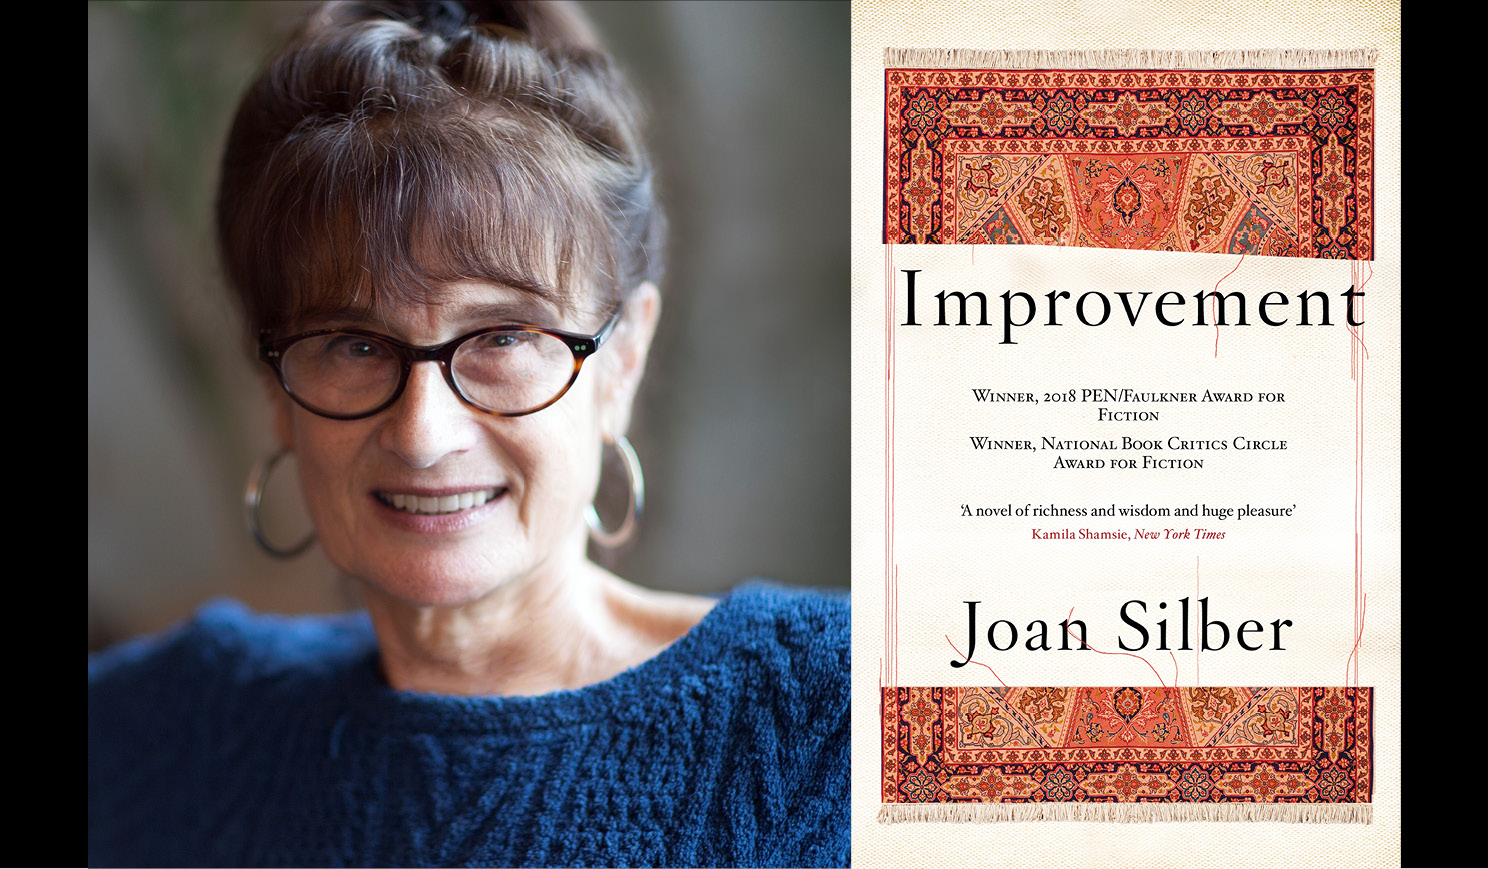 Joan Silber's headshot alongside the cover of her book Improvement